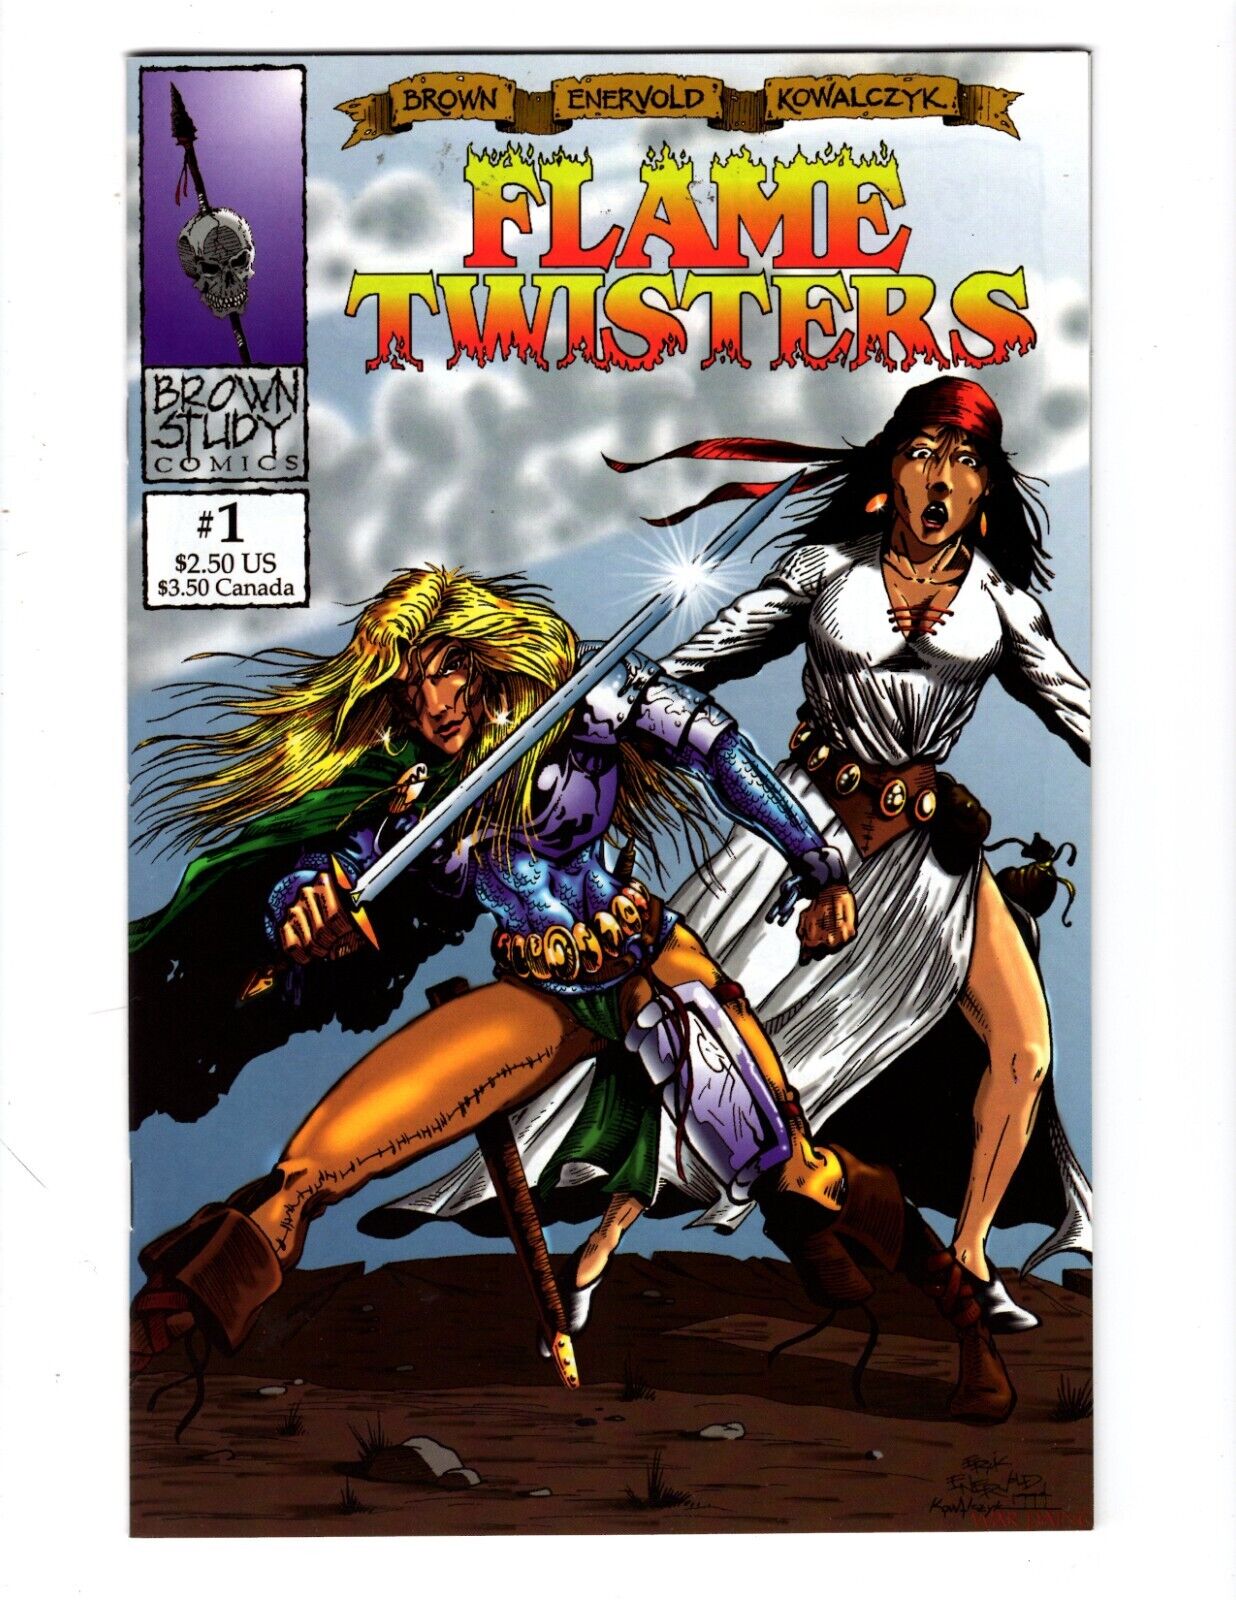 FLAME TWISTERS #1 (FN) [1994 BROWN STUDY COMICS]